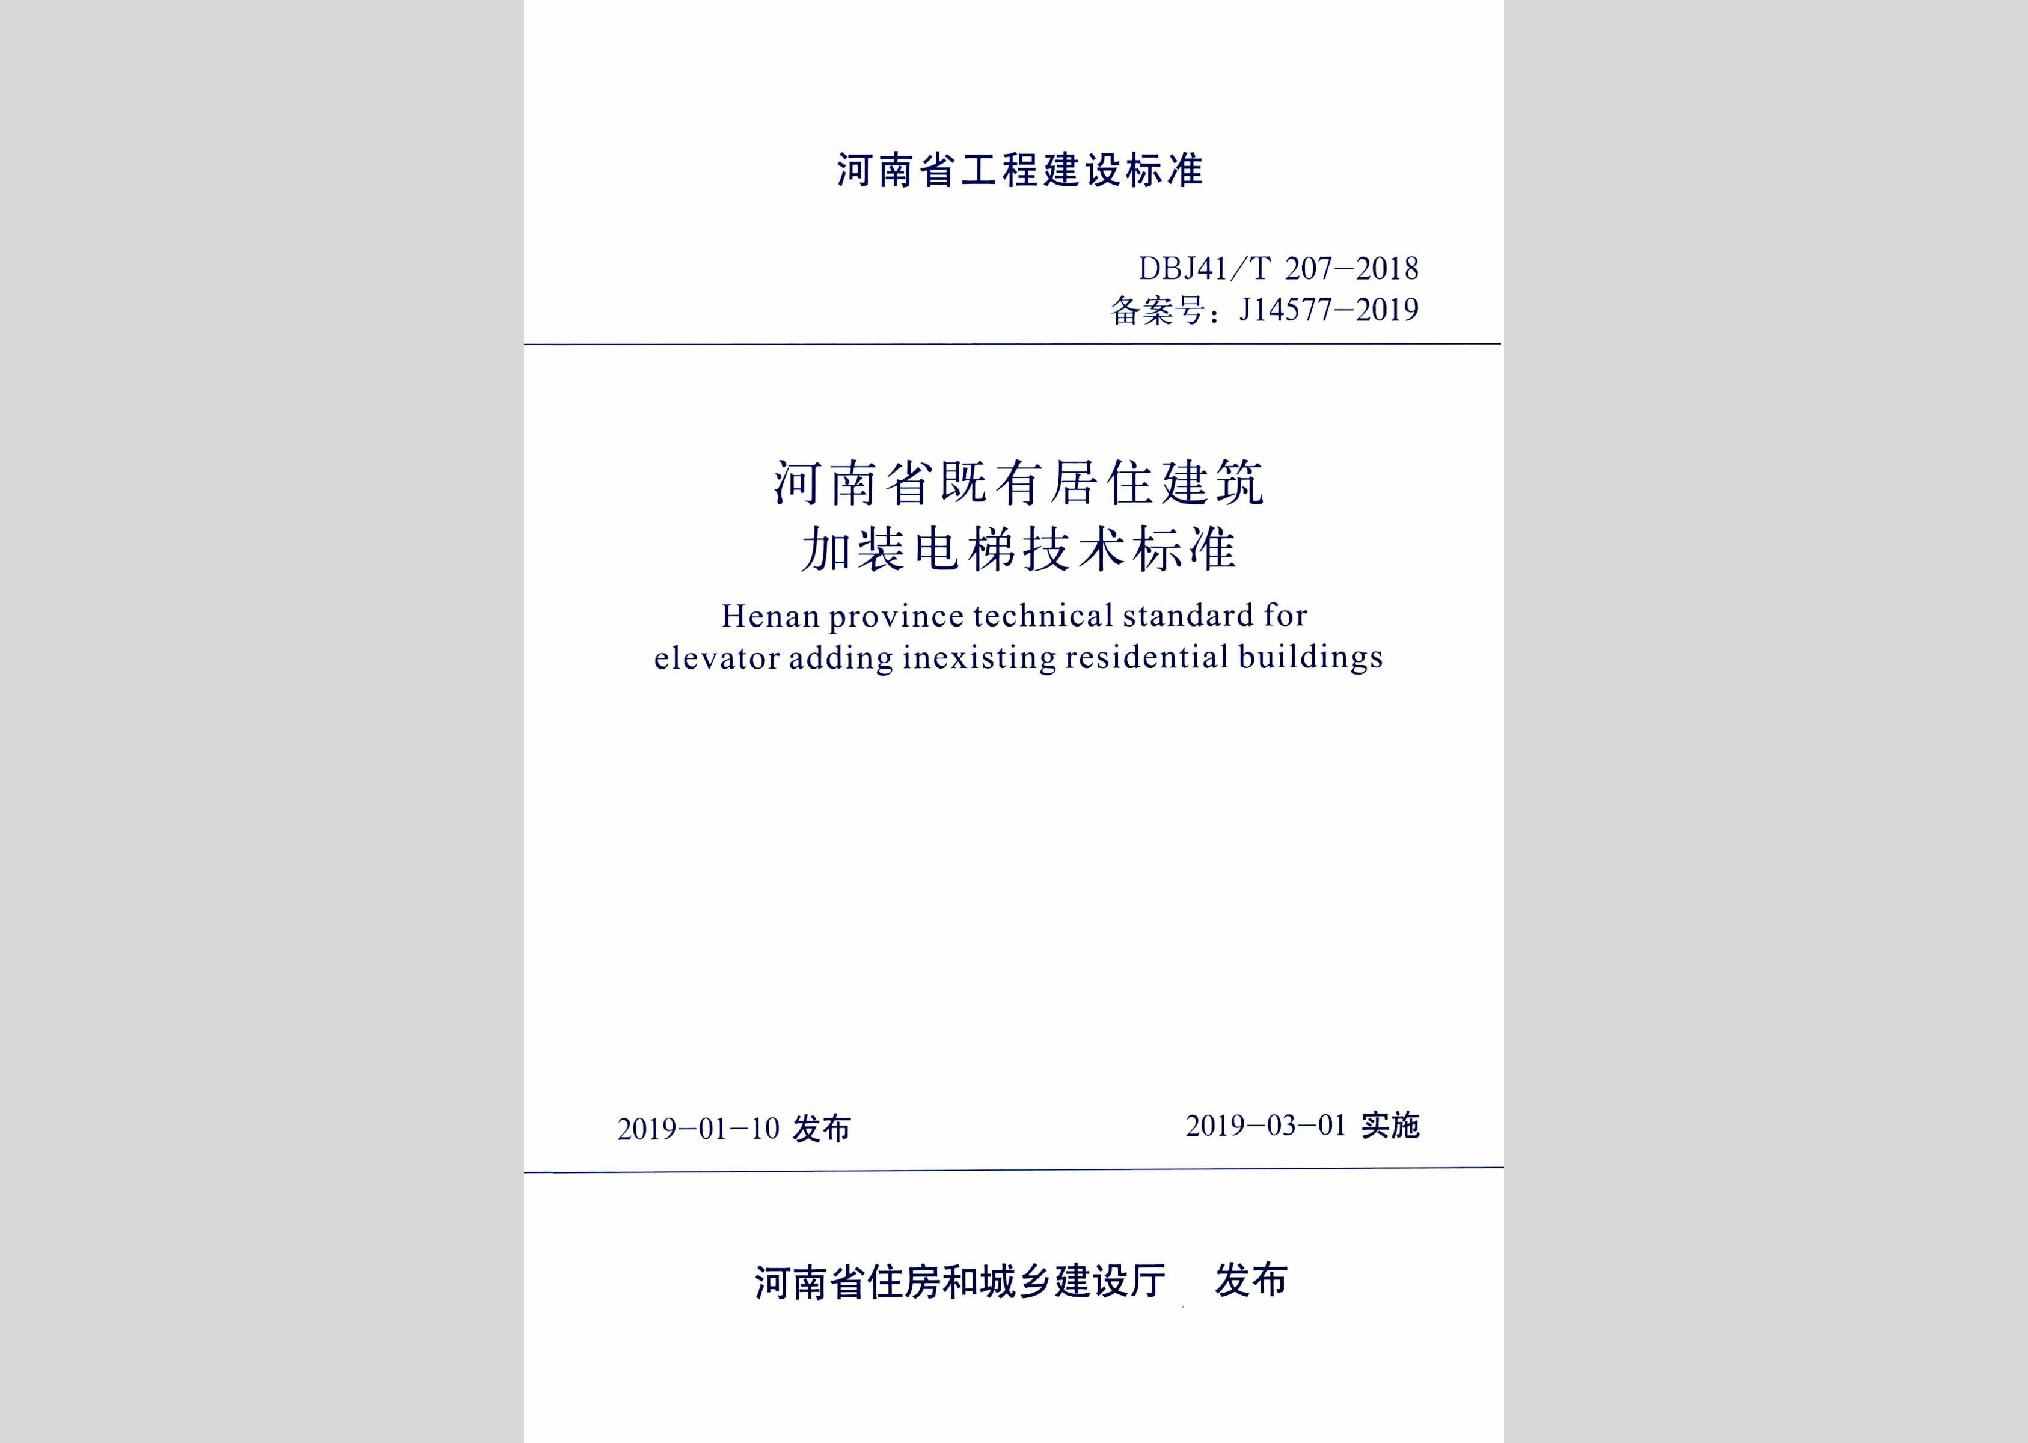 DBJ41/T207-2018：河南省既有居住建筑加装电梯技术标准